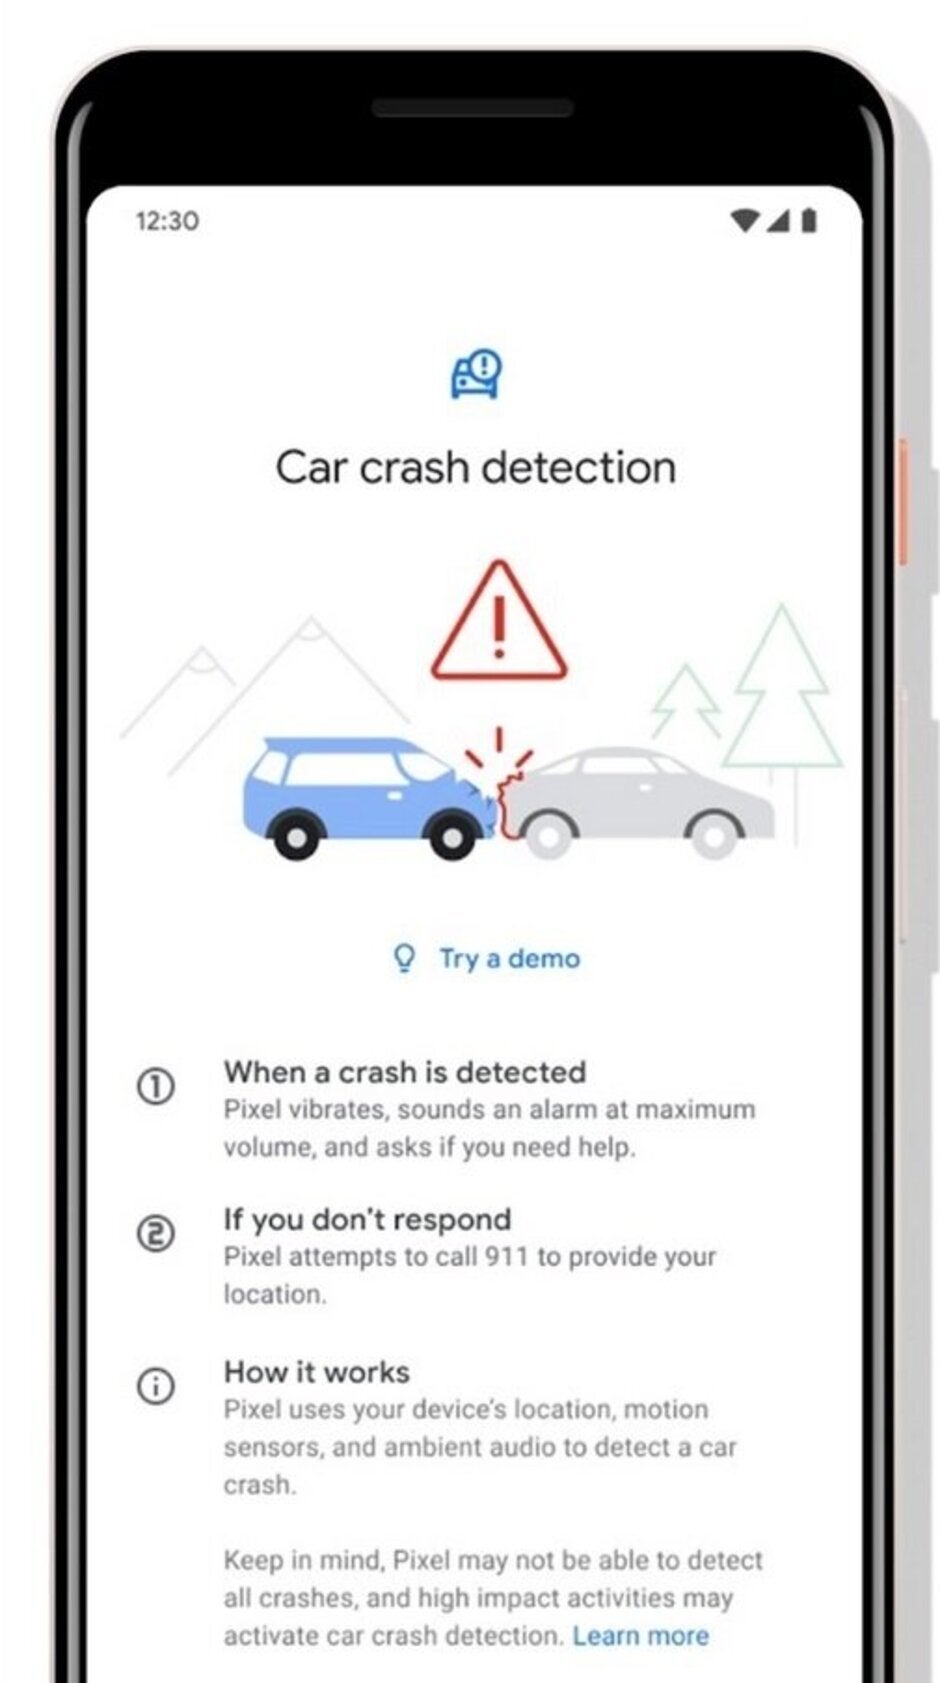 Car crash detection is coming to the Pixels - Google accidentally leaks car crash detection for Pixel handsets